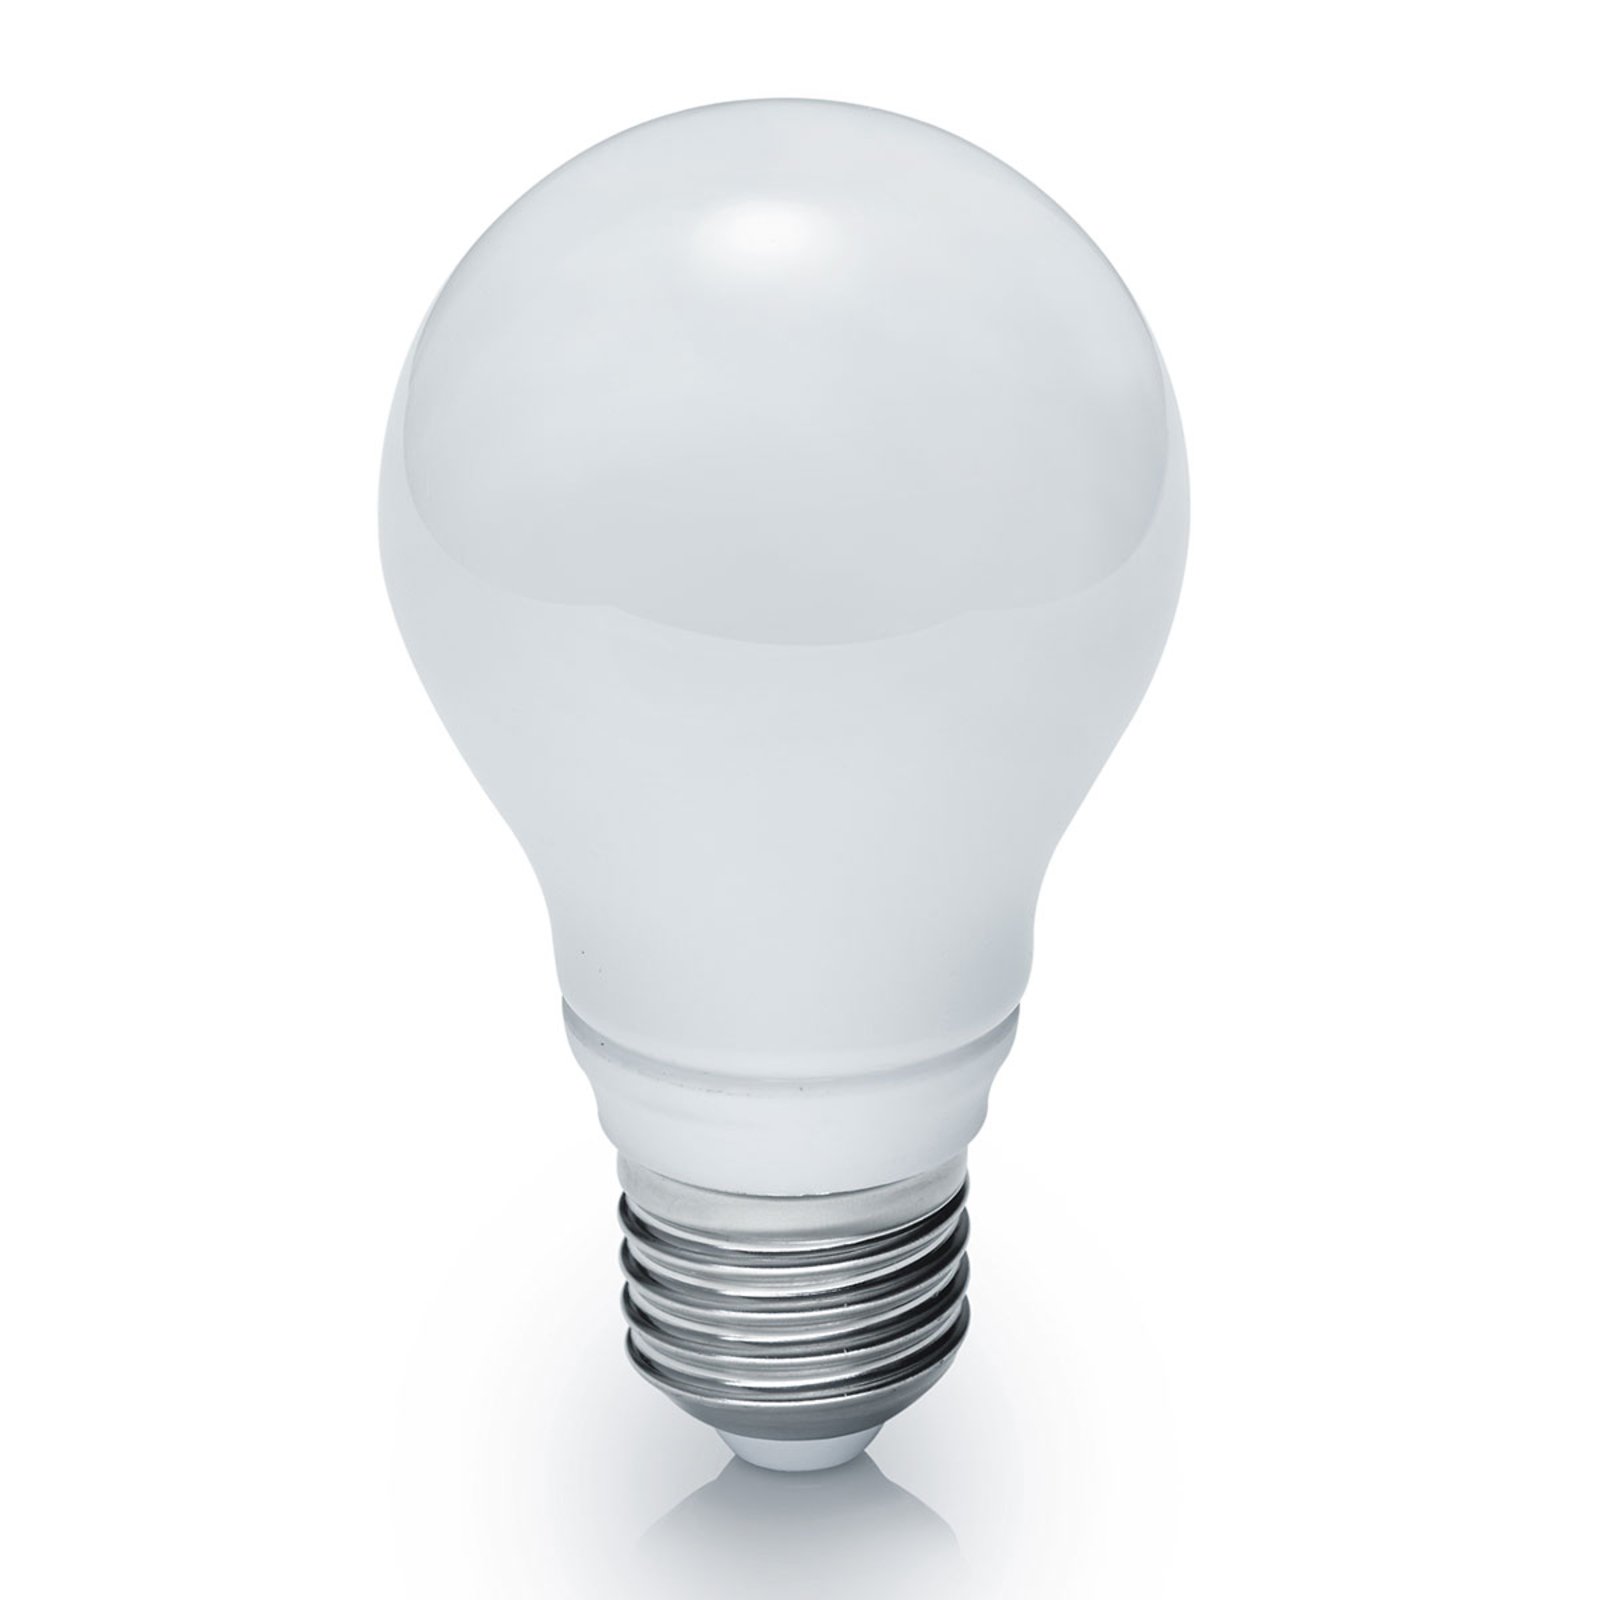 psychologie verdund Tegenslag LED lamp E27 10W dimbaar, lichttemperatuur warmwit | Lampen24.nl